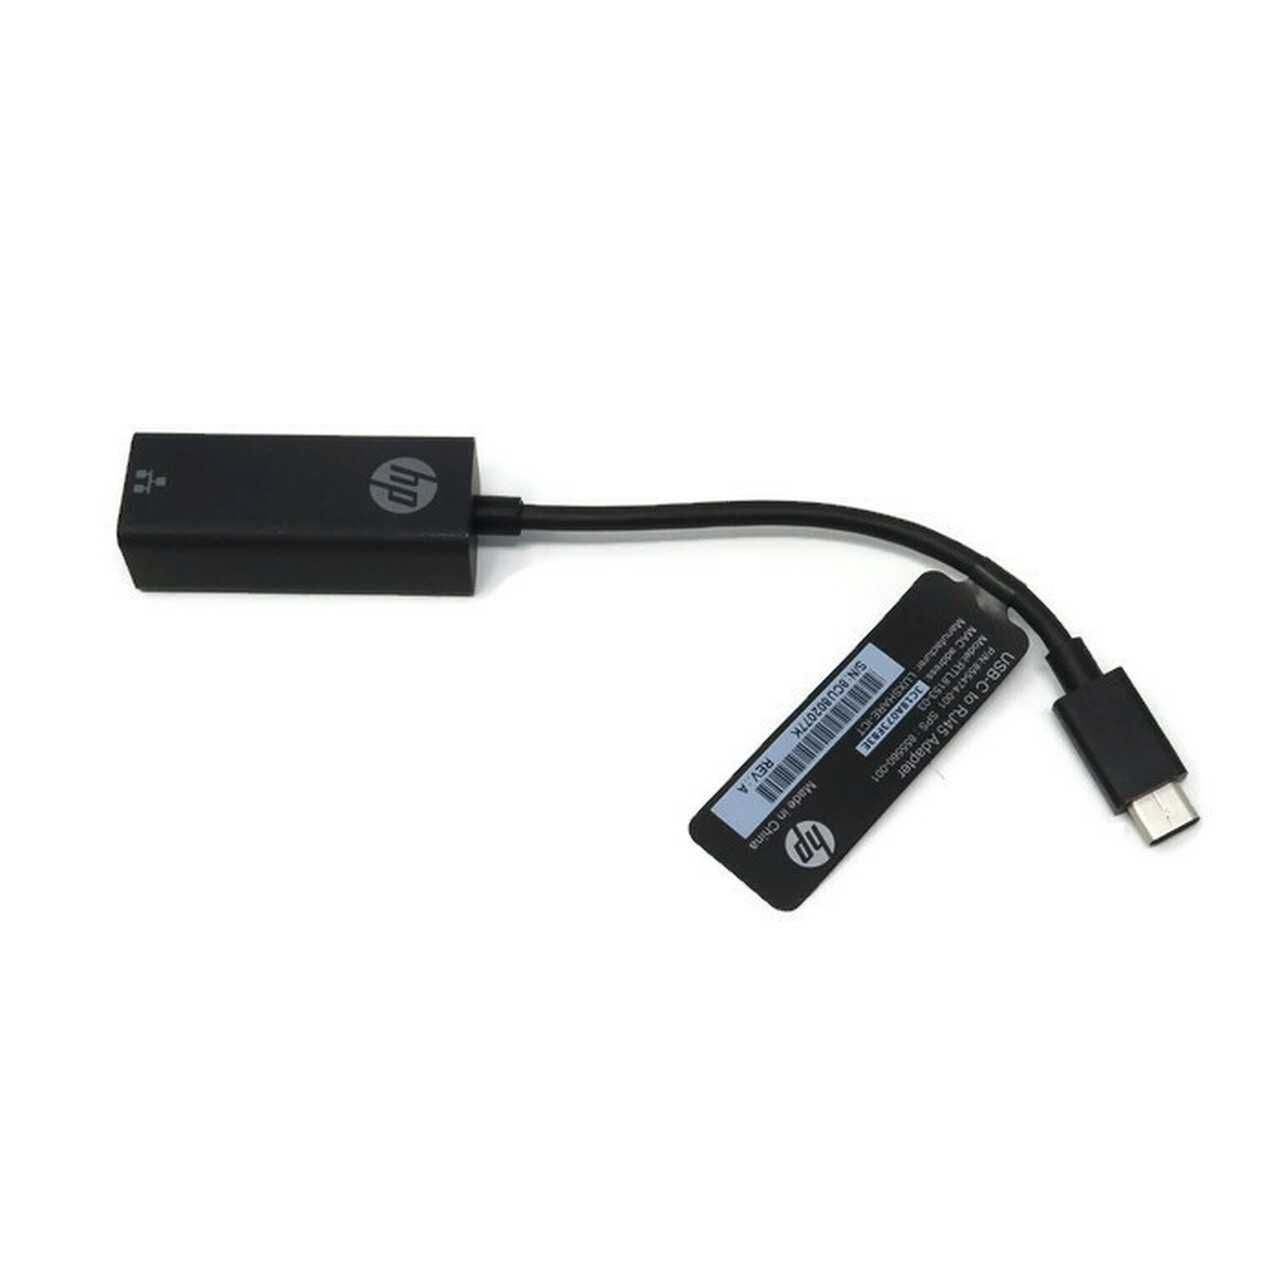 Adaptor HP Gigabit Placa retea USB Type-C to RJ45 Windows Mac v7w66aa